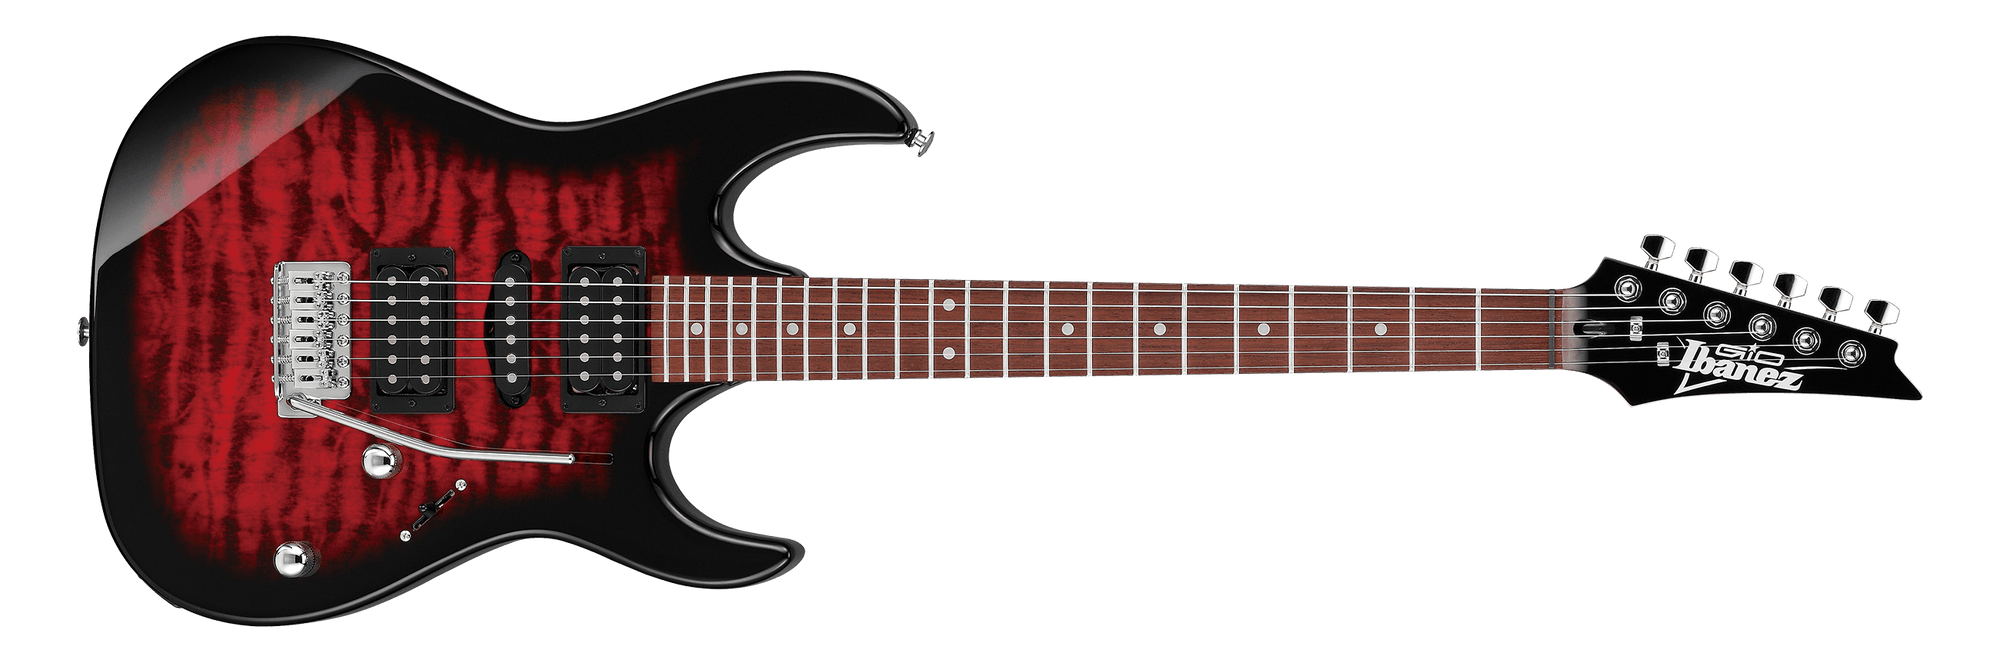 GRX70QATRB Electric Guitar, Transparent Red Burst